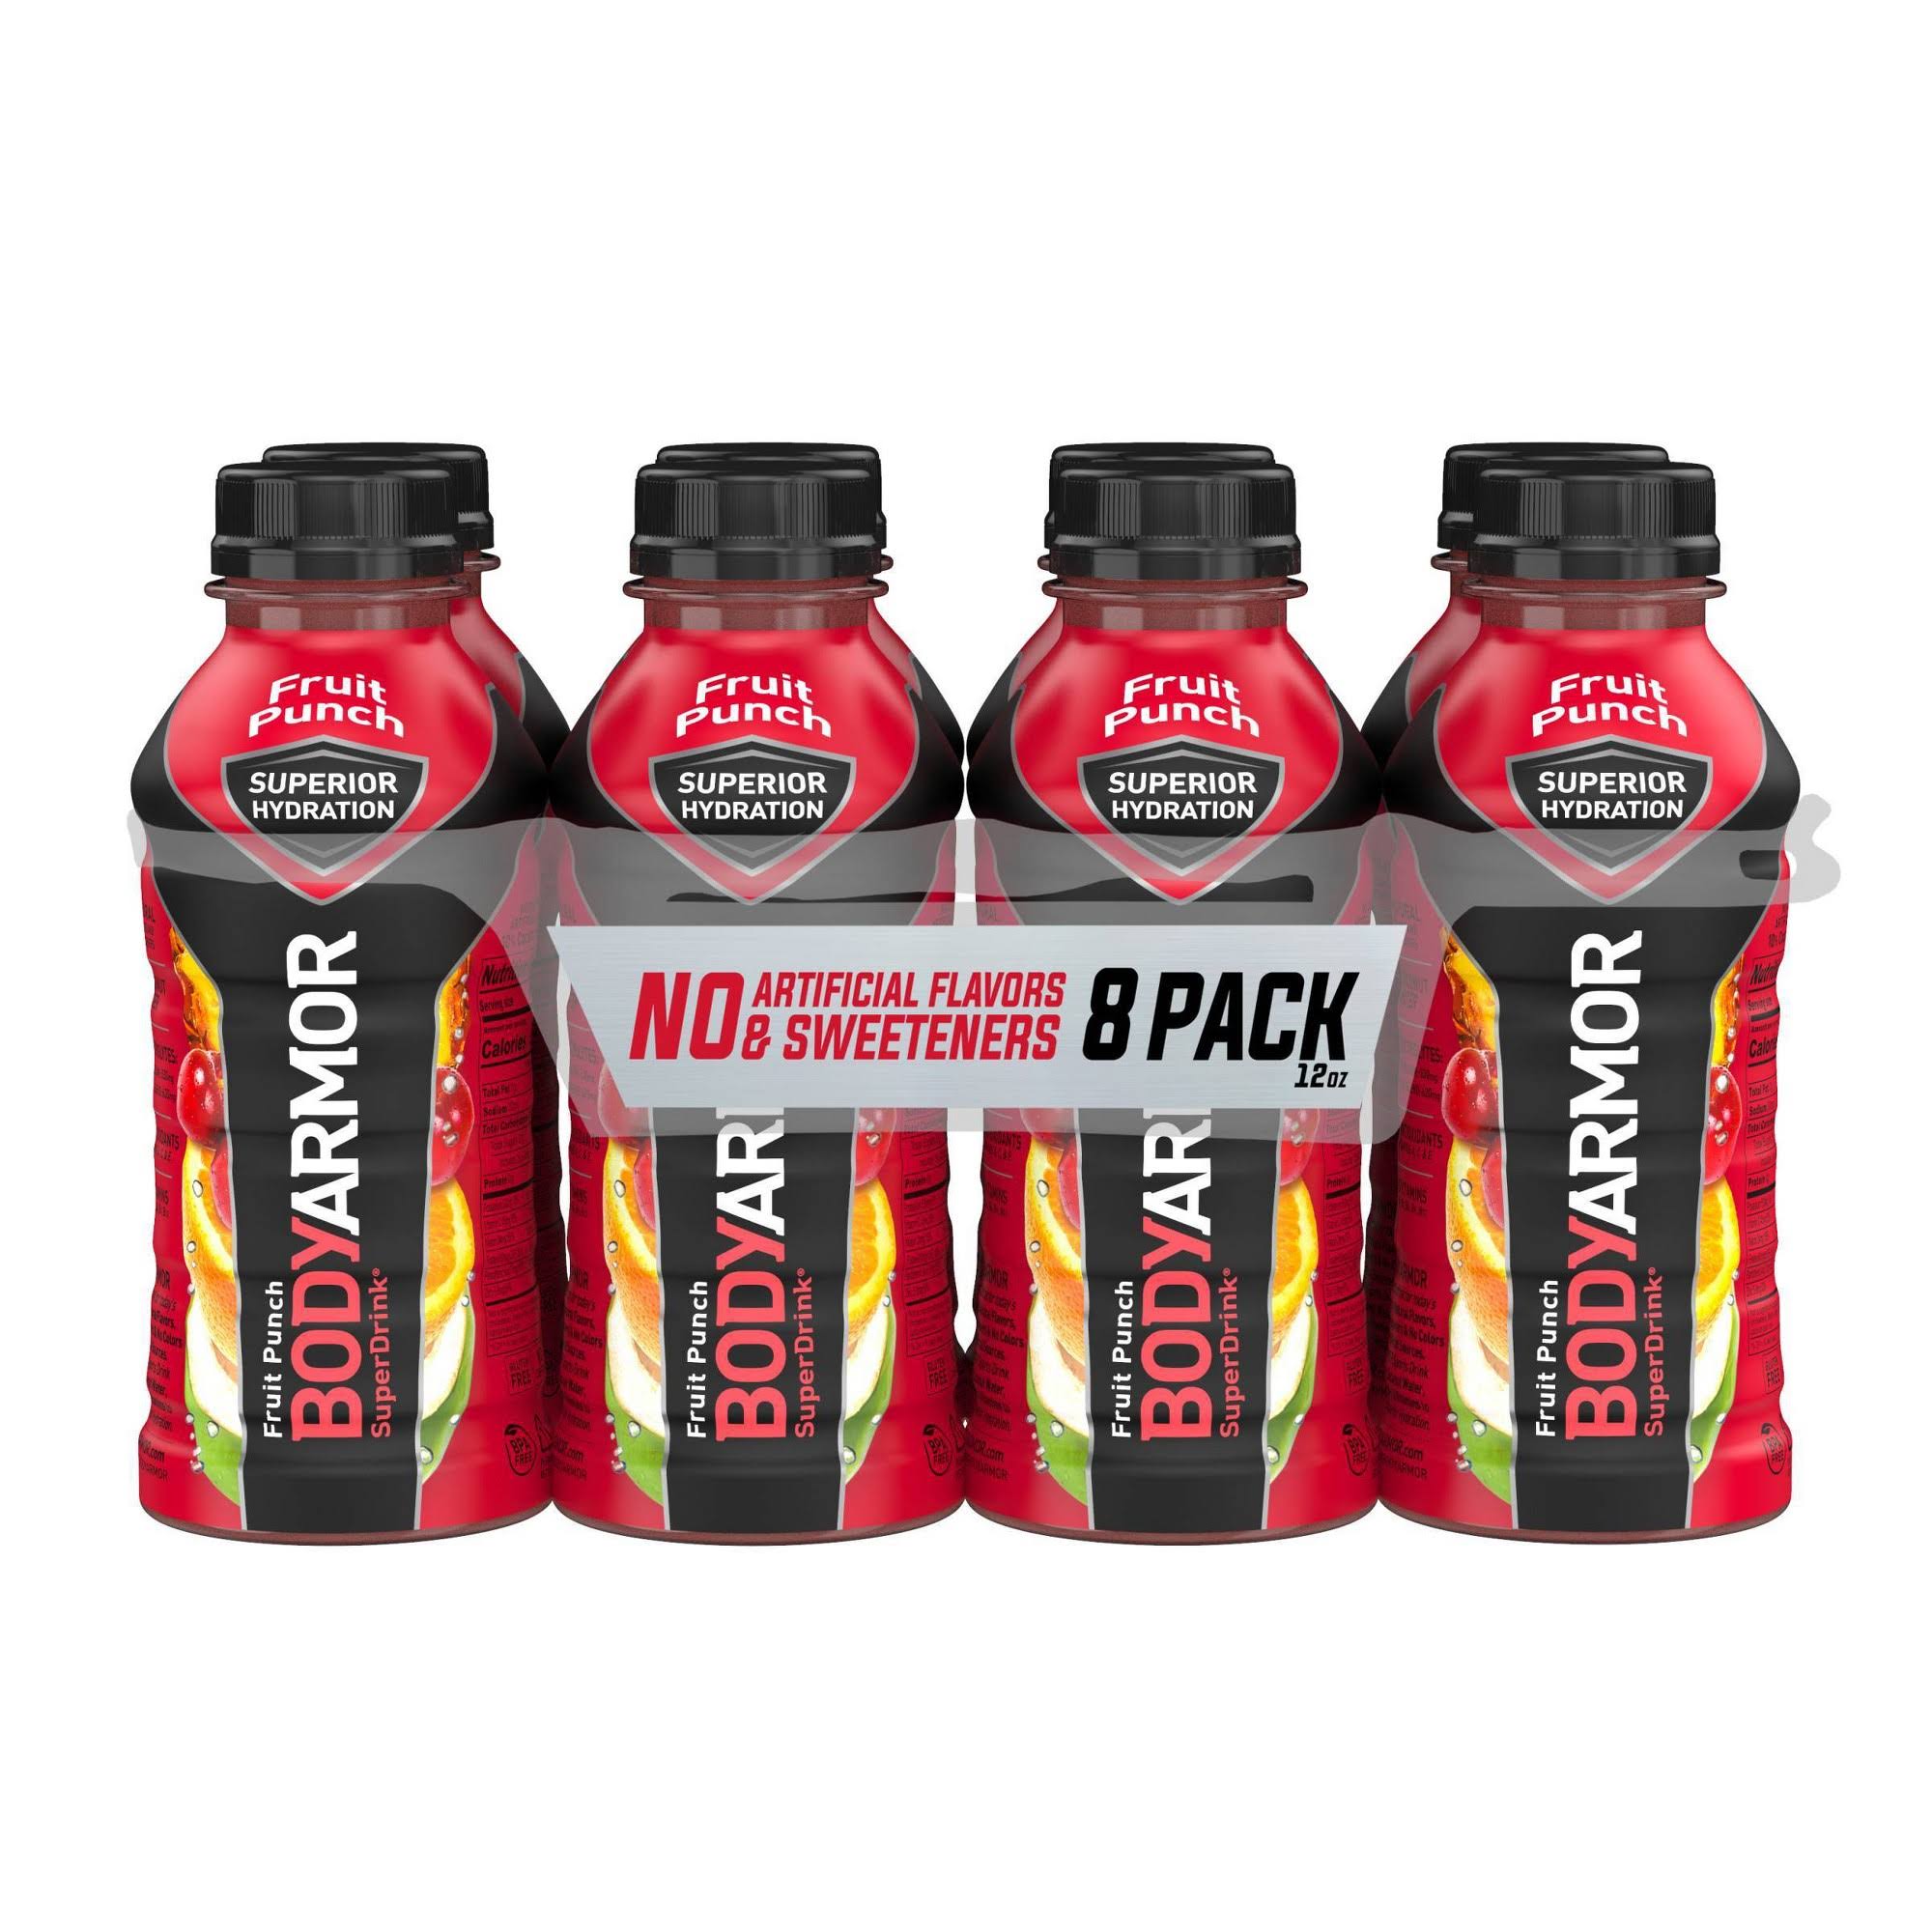 Bodyarmor SuperDrink, Fruit Punch - 8 pack, 12 fl oz bottles